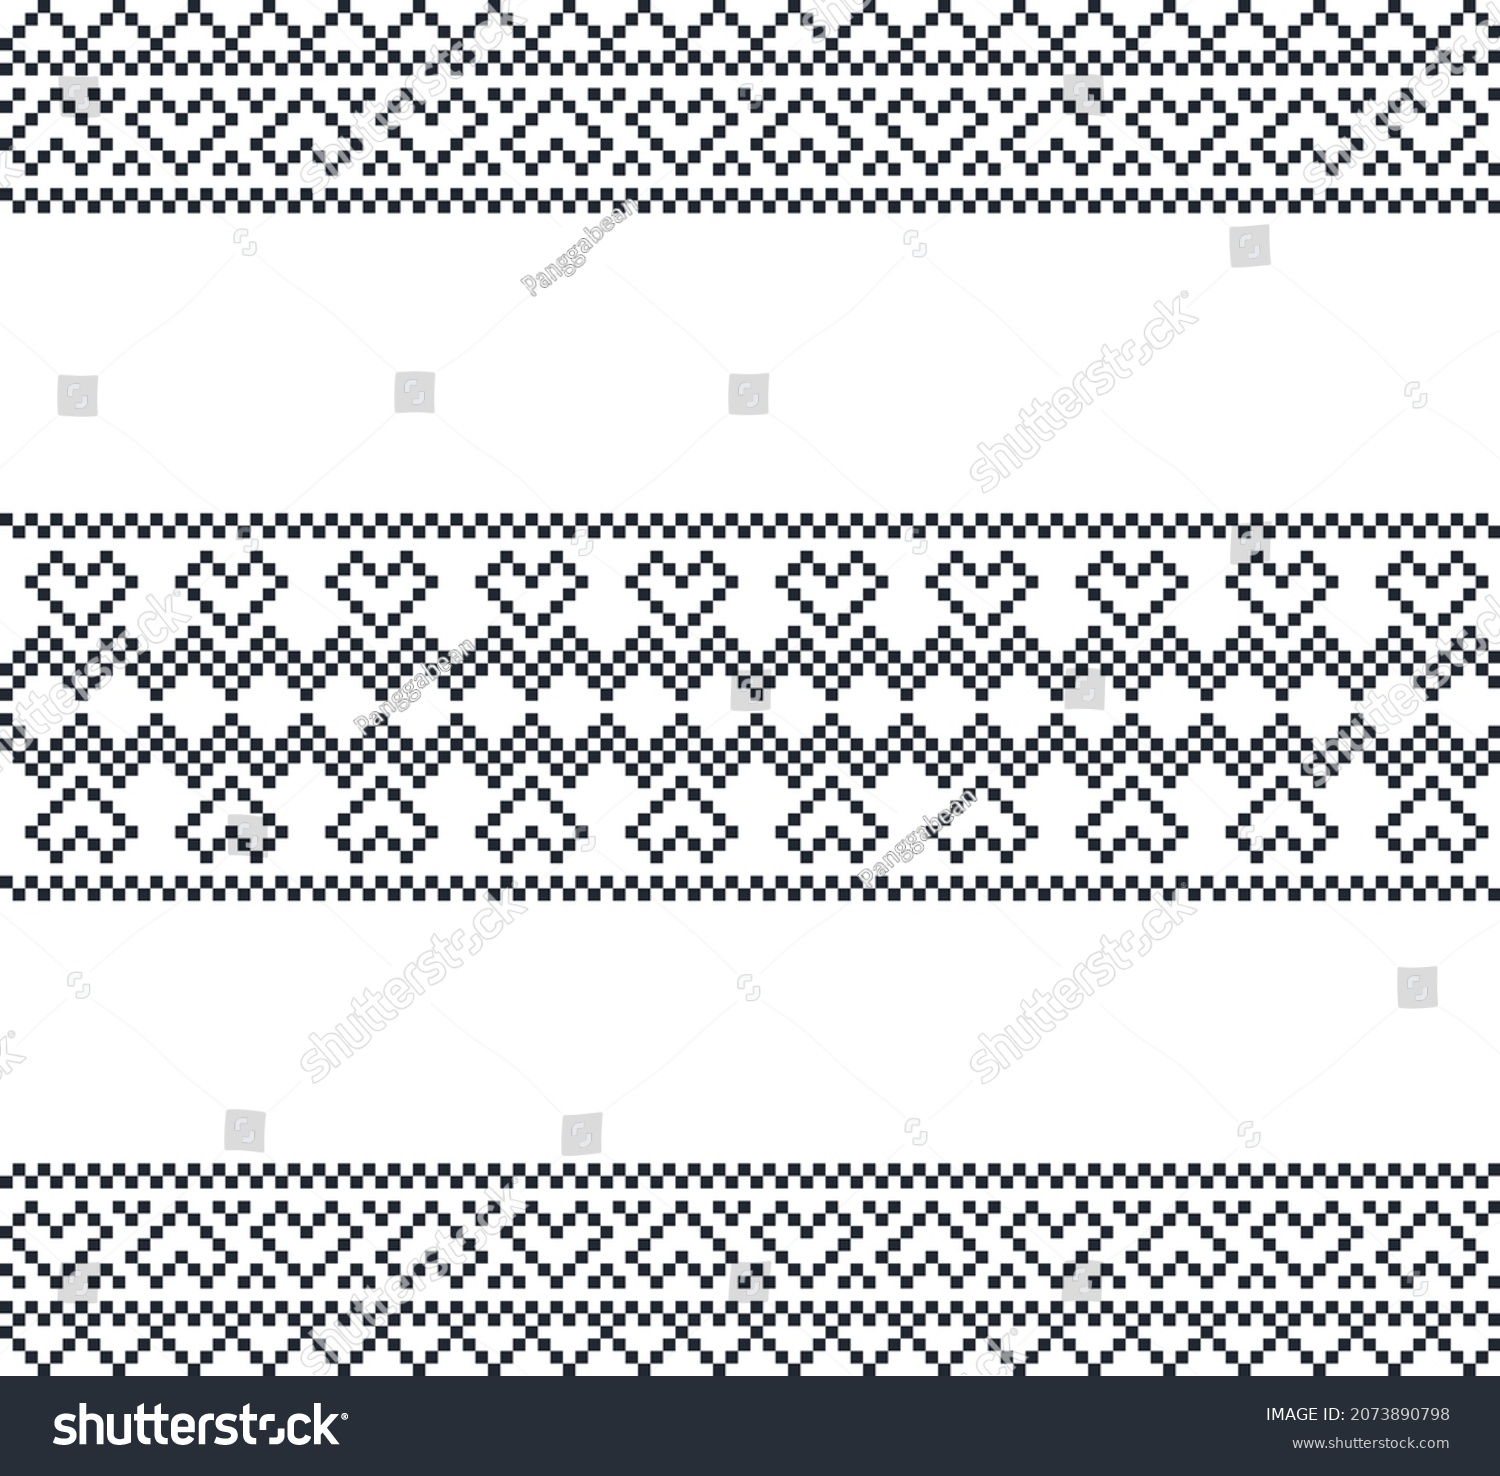 SVG of Traditional folk art border embroidery pattern svg